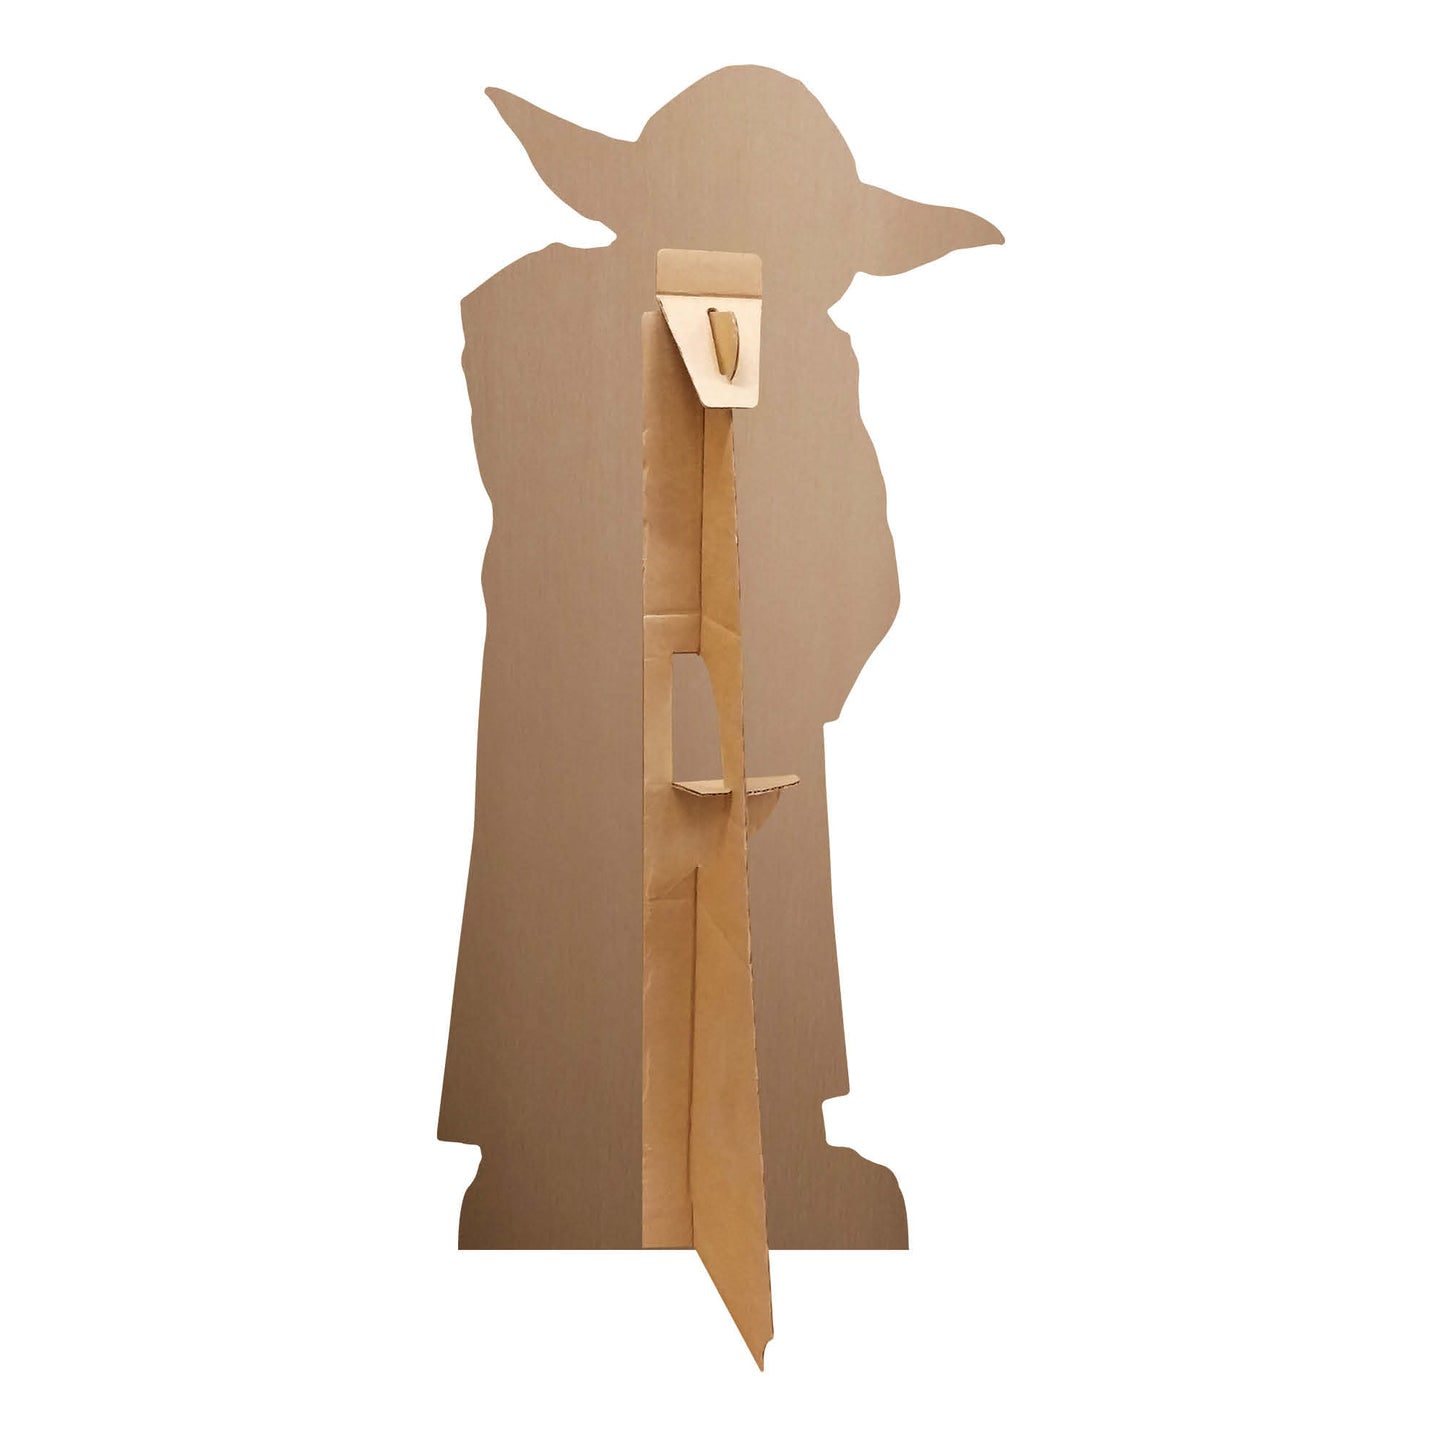 SC4382 Yoda Star Wars Force Cardboard Cut Out Height 76cm